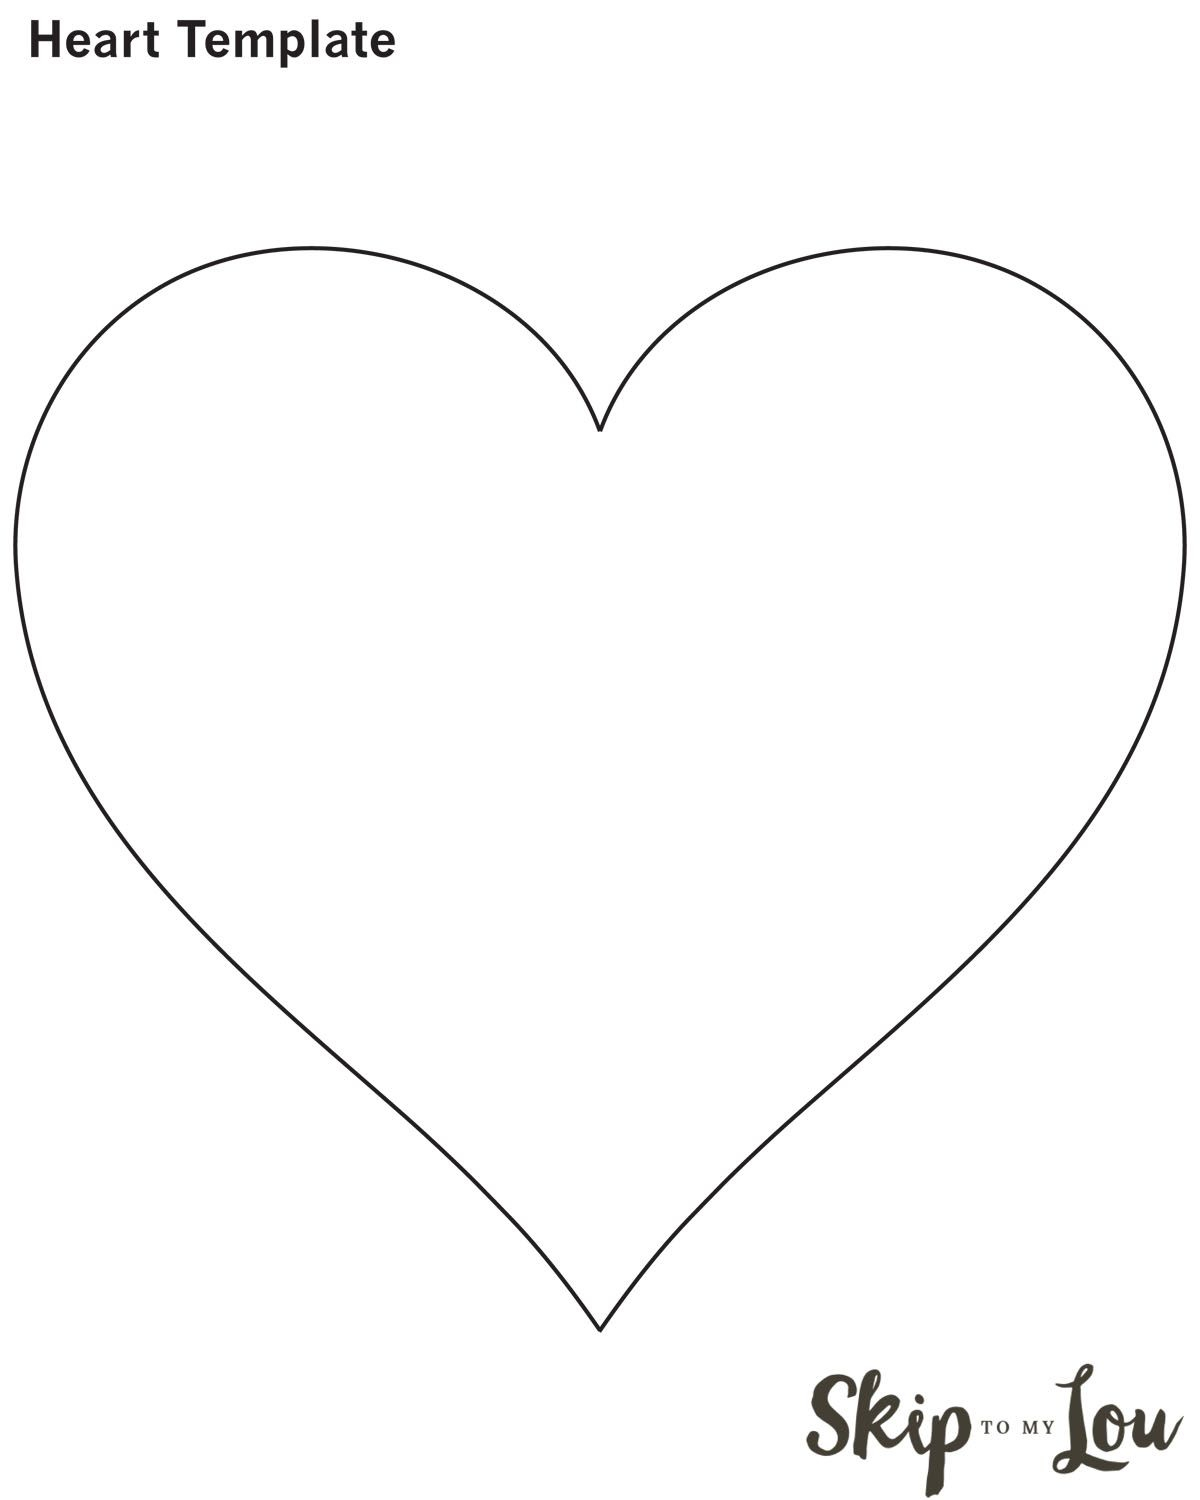 Valentine Heart Attack Idea With Free Printable Heart Template - Free Printable Hearts